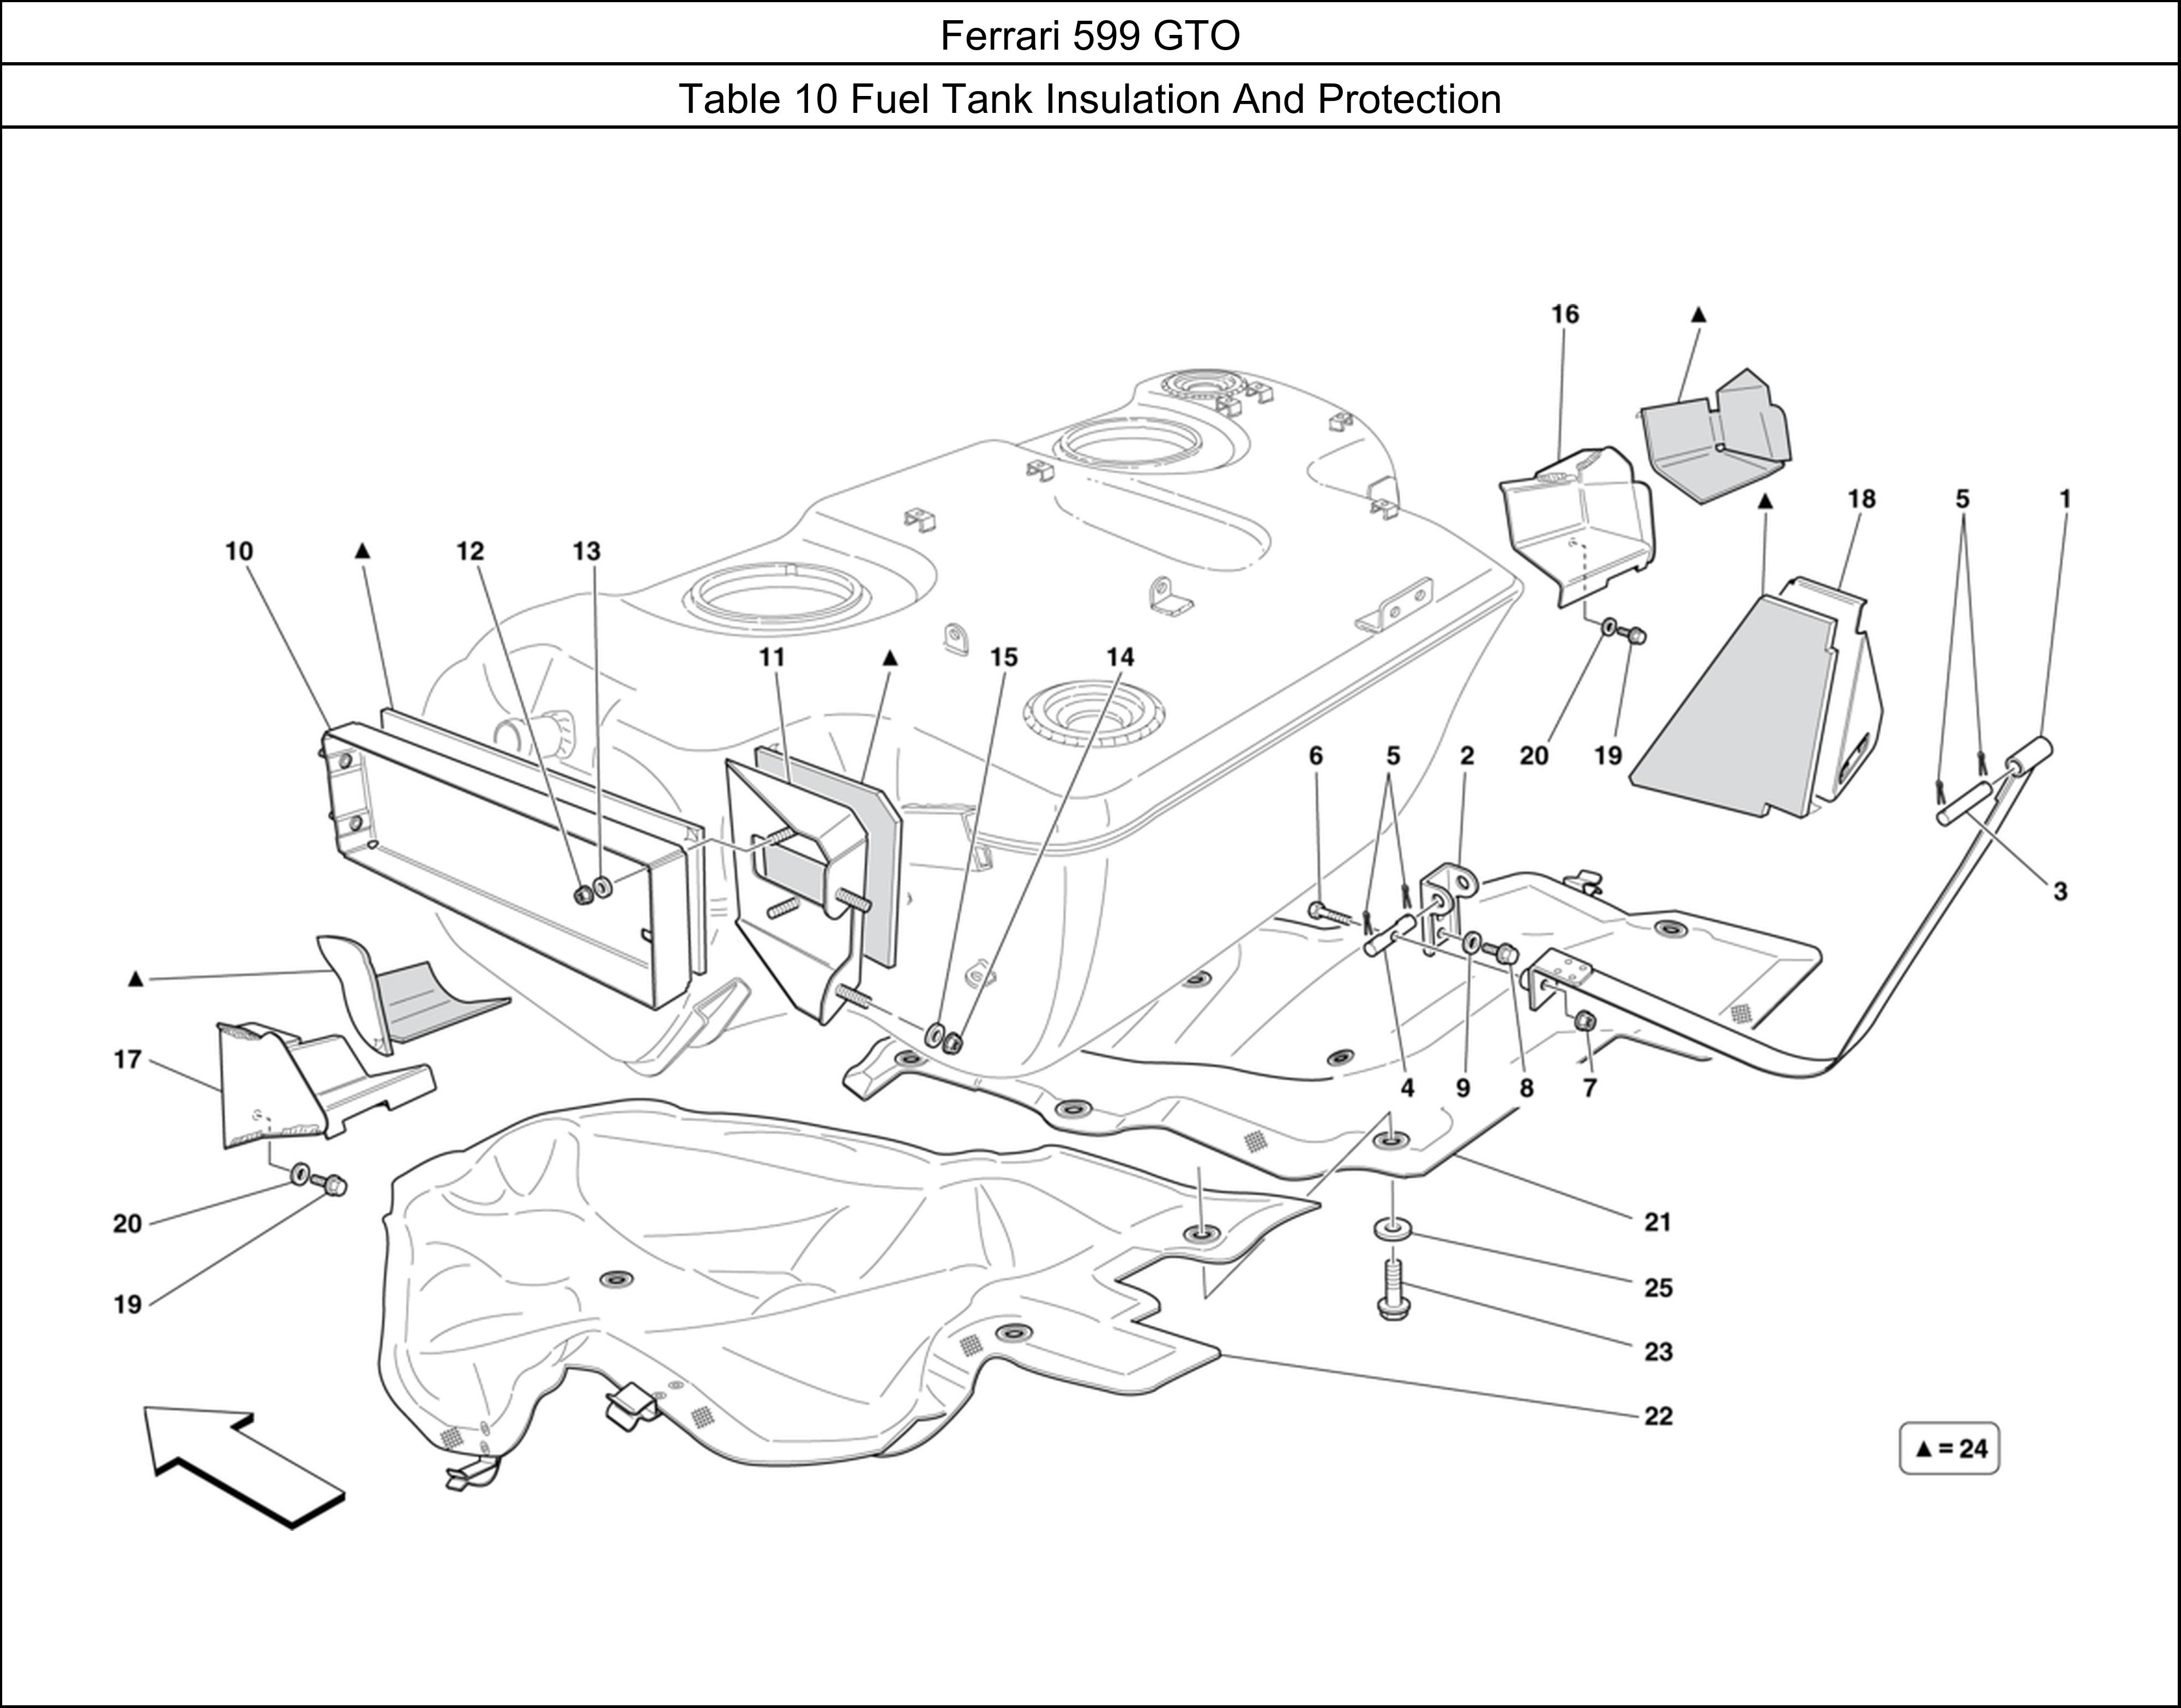 Ferrari Parts Ferrari 599 GTO Table 10 Fuel Tank Insulation And Protection